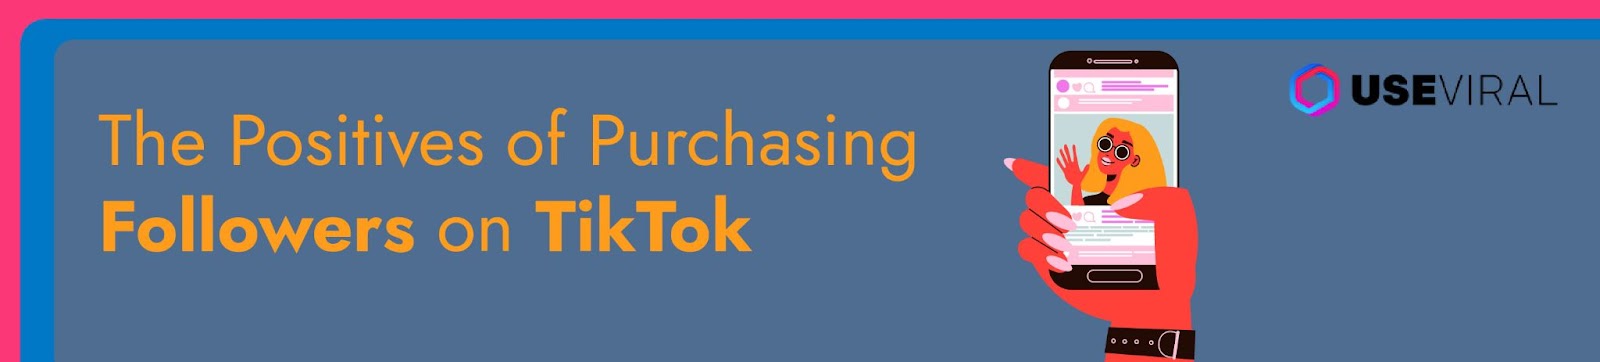 The Positives of Purchasing Followers on TikTok